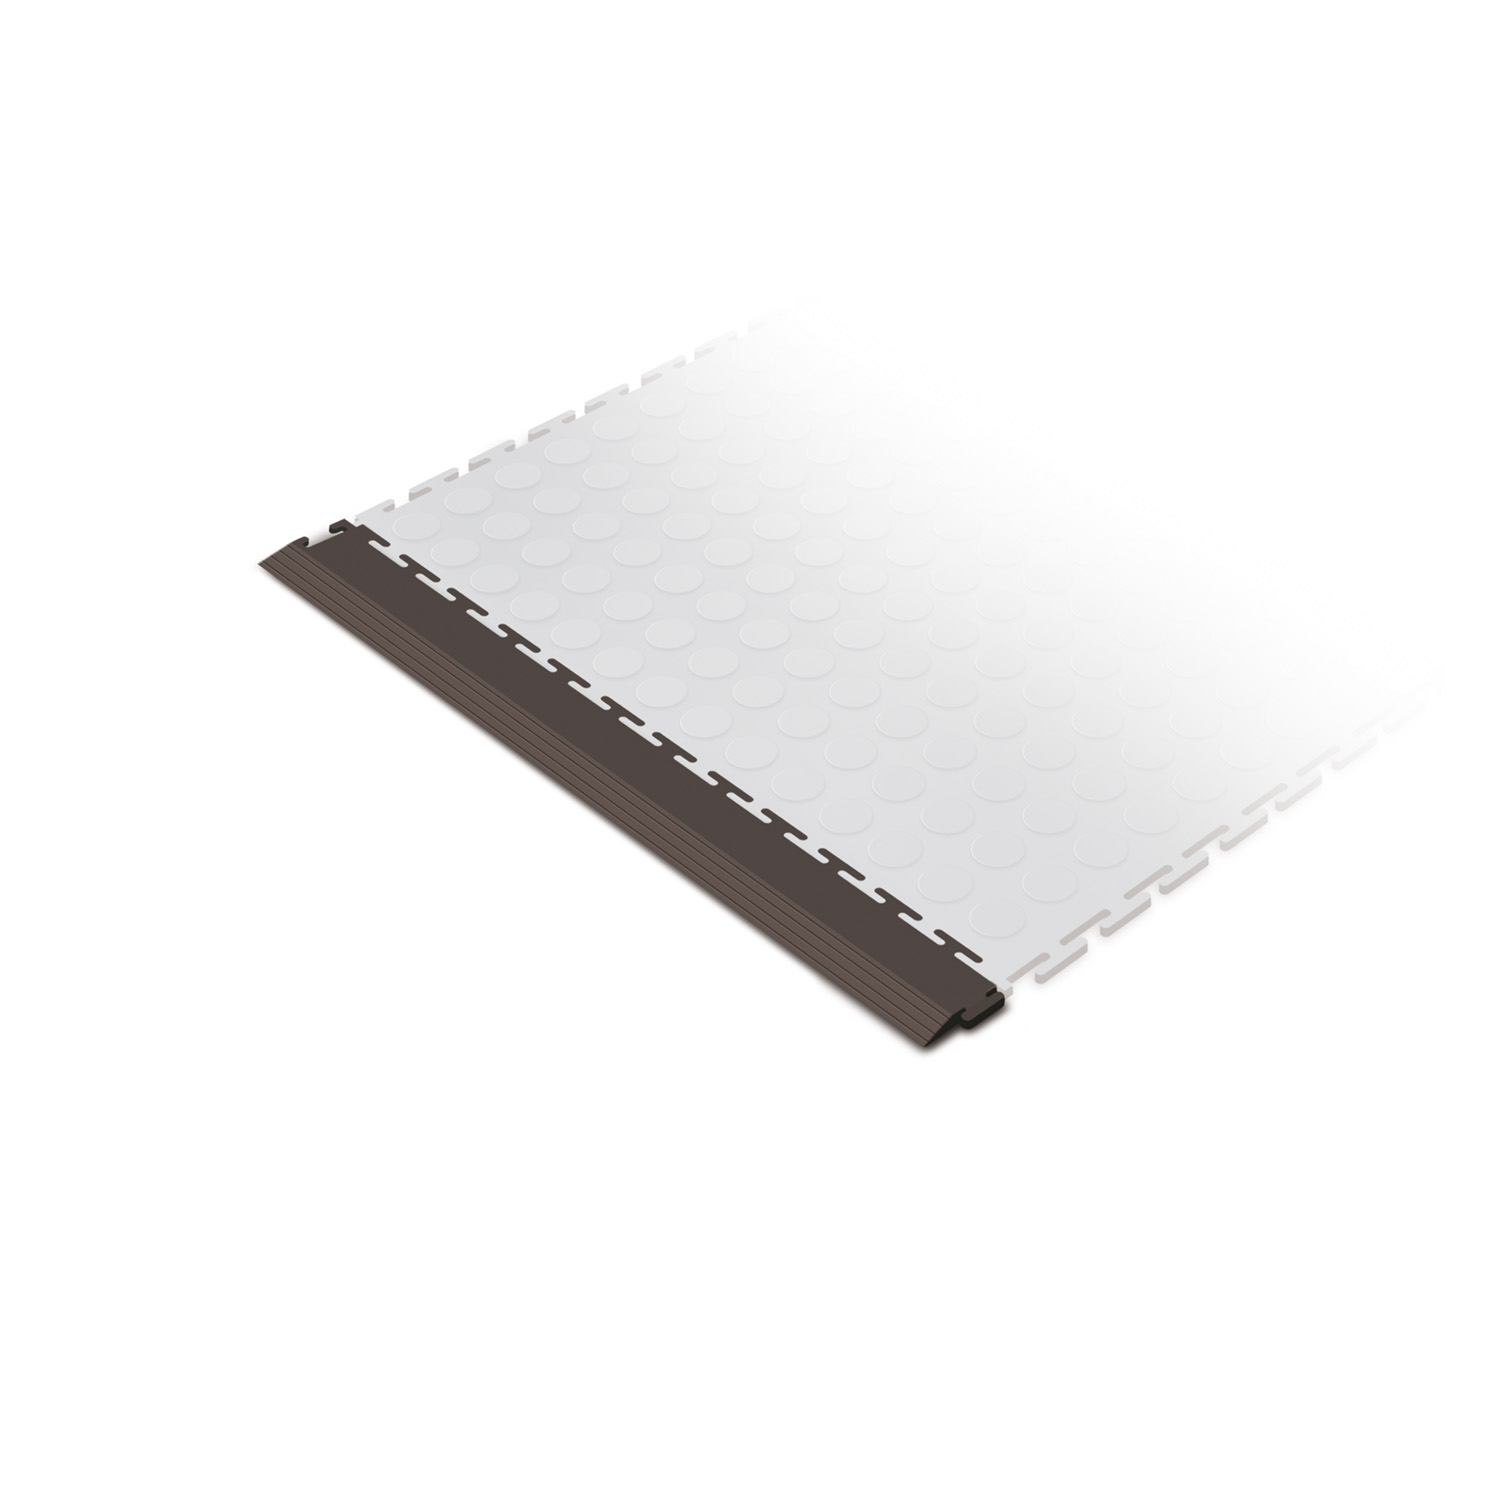 Standard edge ramp tile (black)